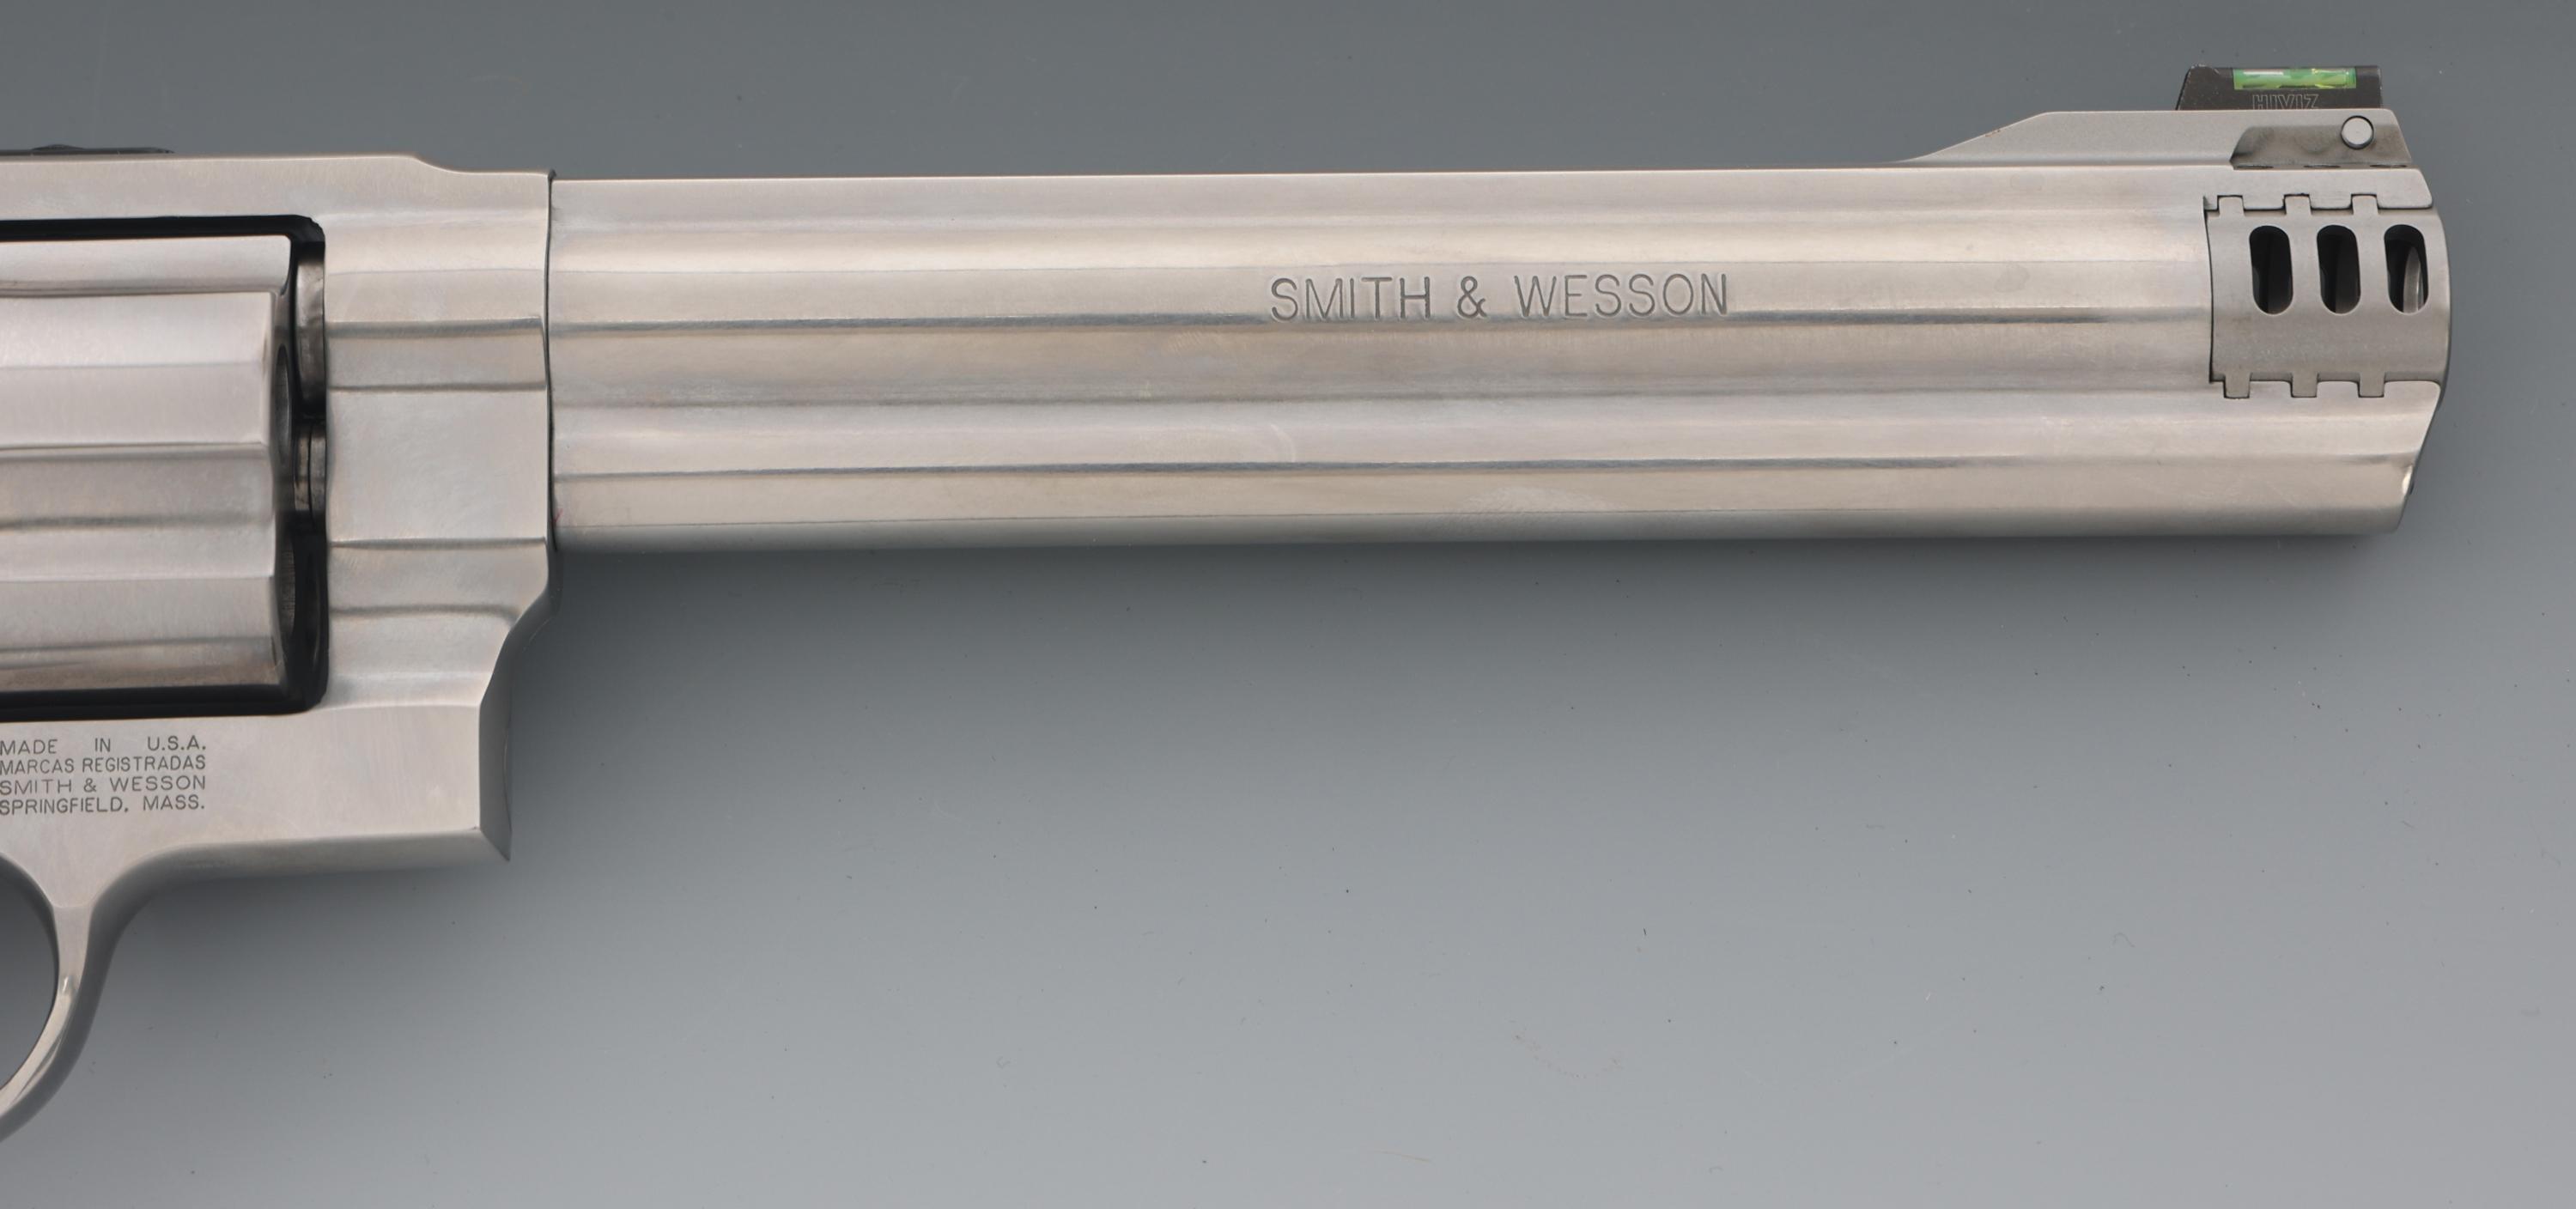 SMITH & WESSON MODEL 460 XVR .460 CALIBER REVOLVER